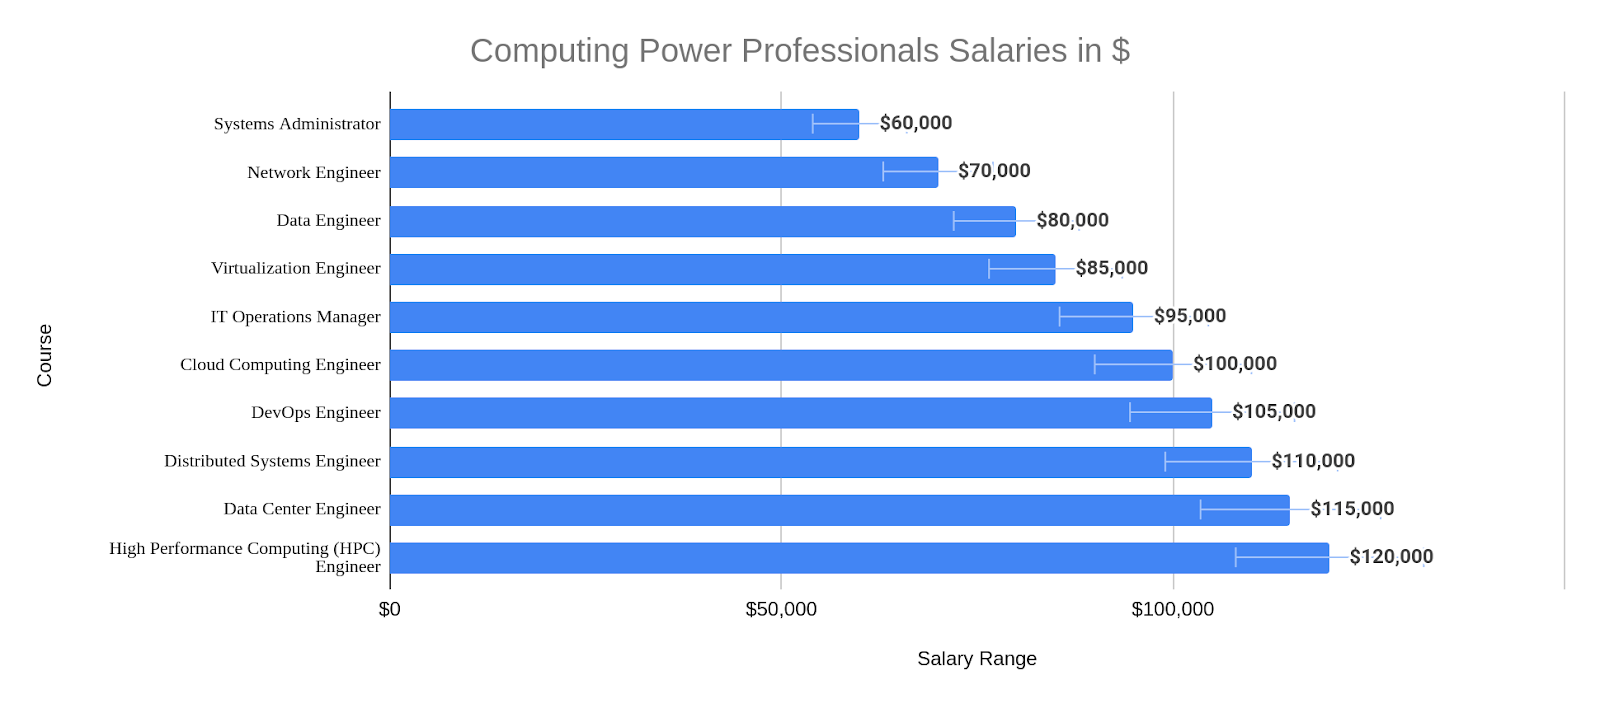 Computing Power Professionals Salaries in $